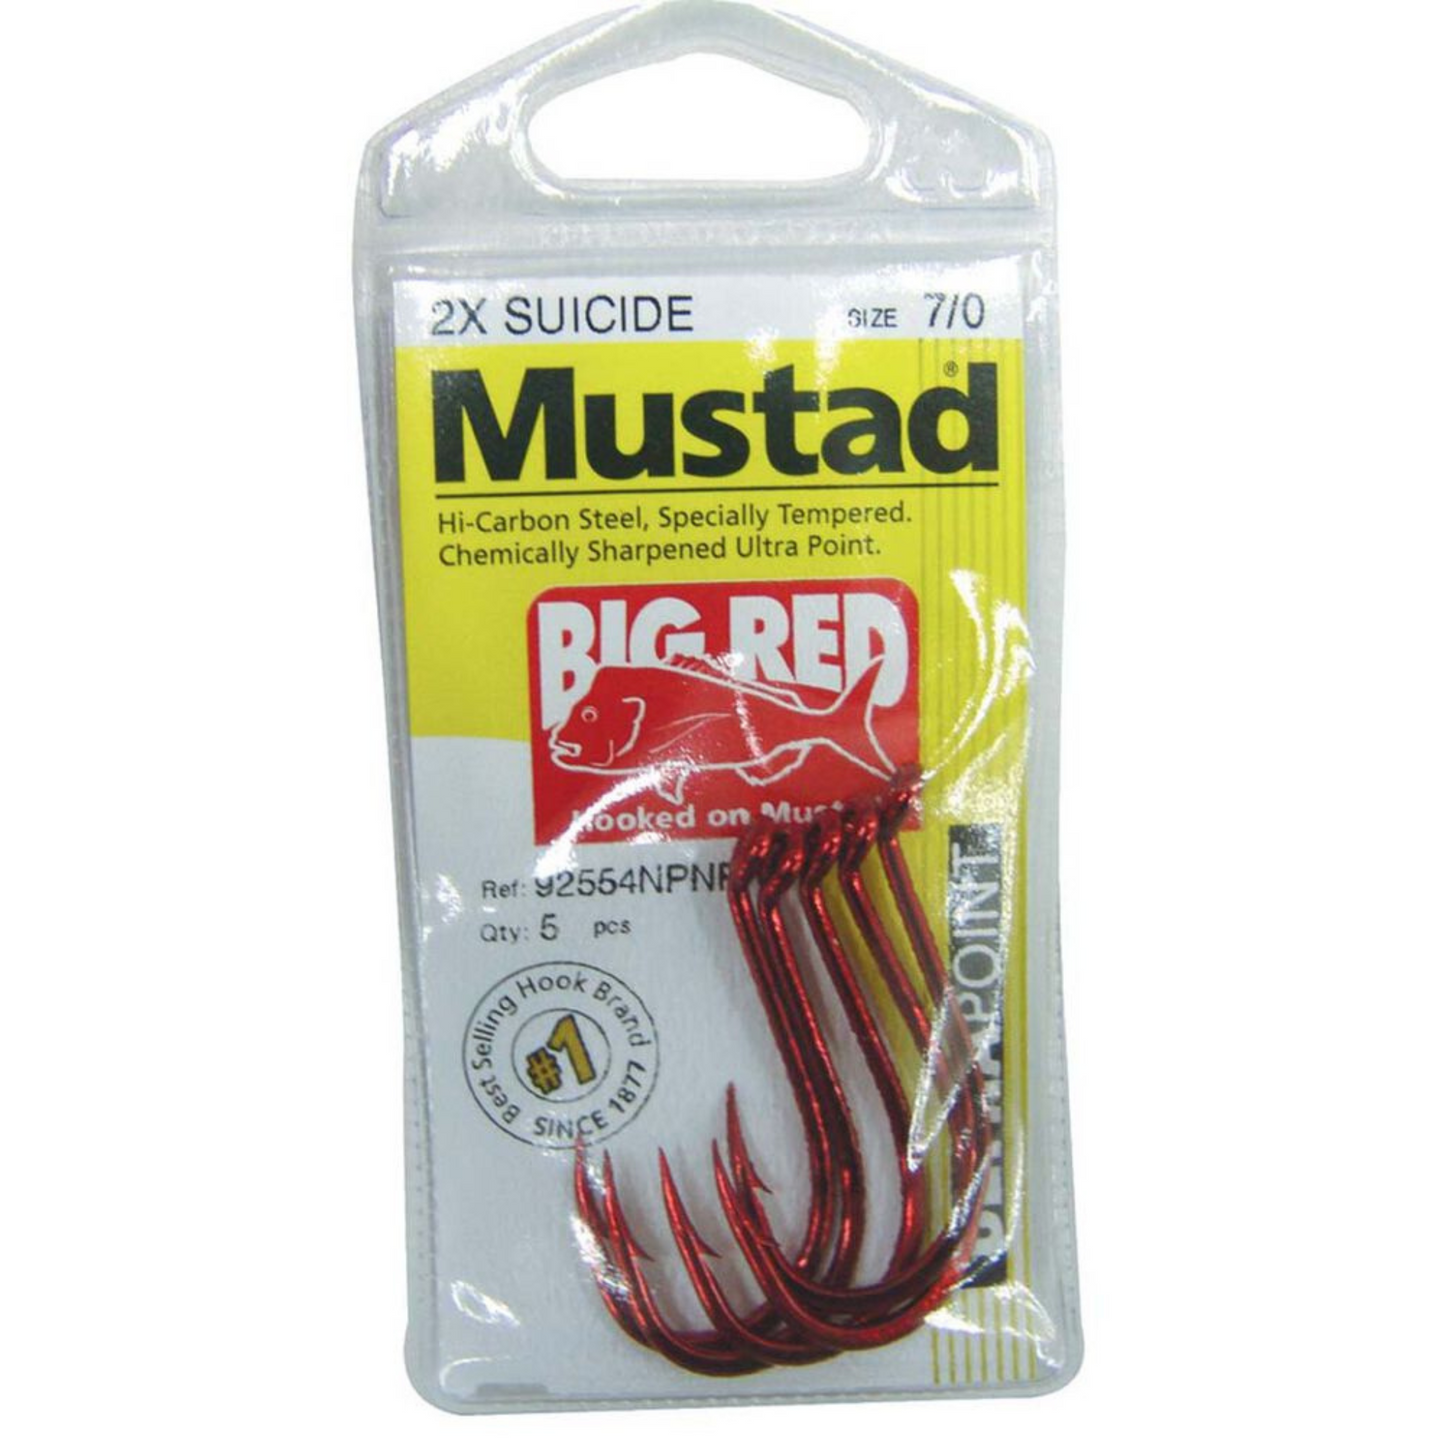 Mustad 2x Suicide Big Red (Hook)